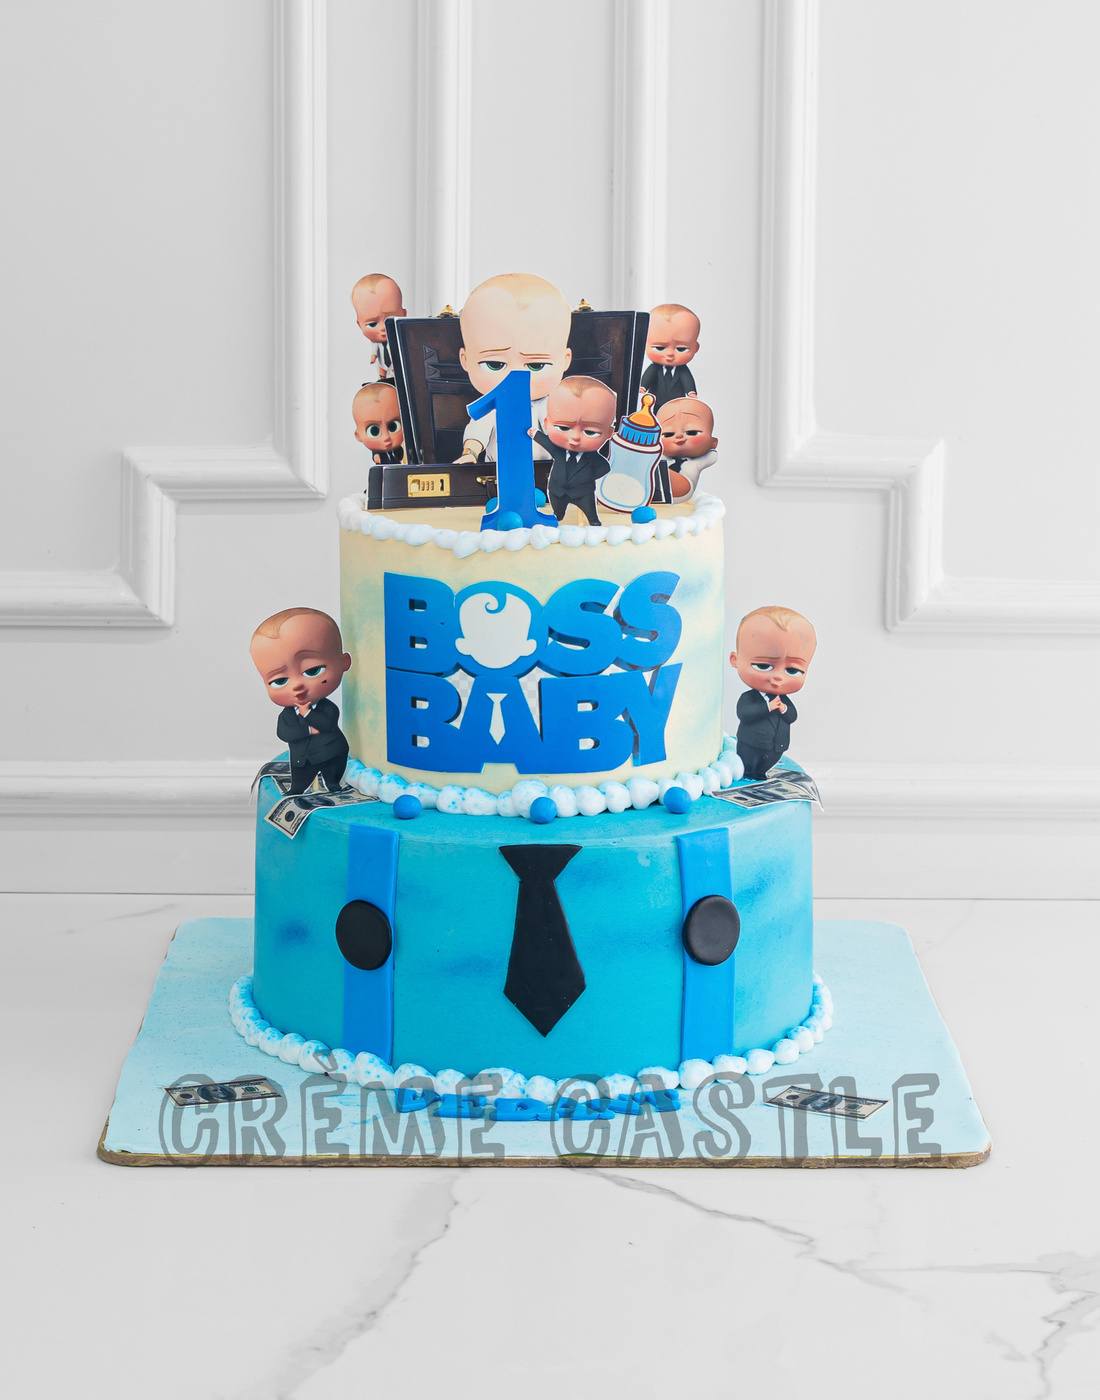 Boss baby theme cake | boss baby fondant cake tutorial step by step | boss  baby birthday cake - YouTube